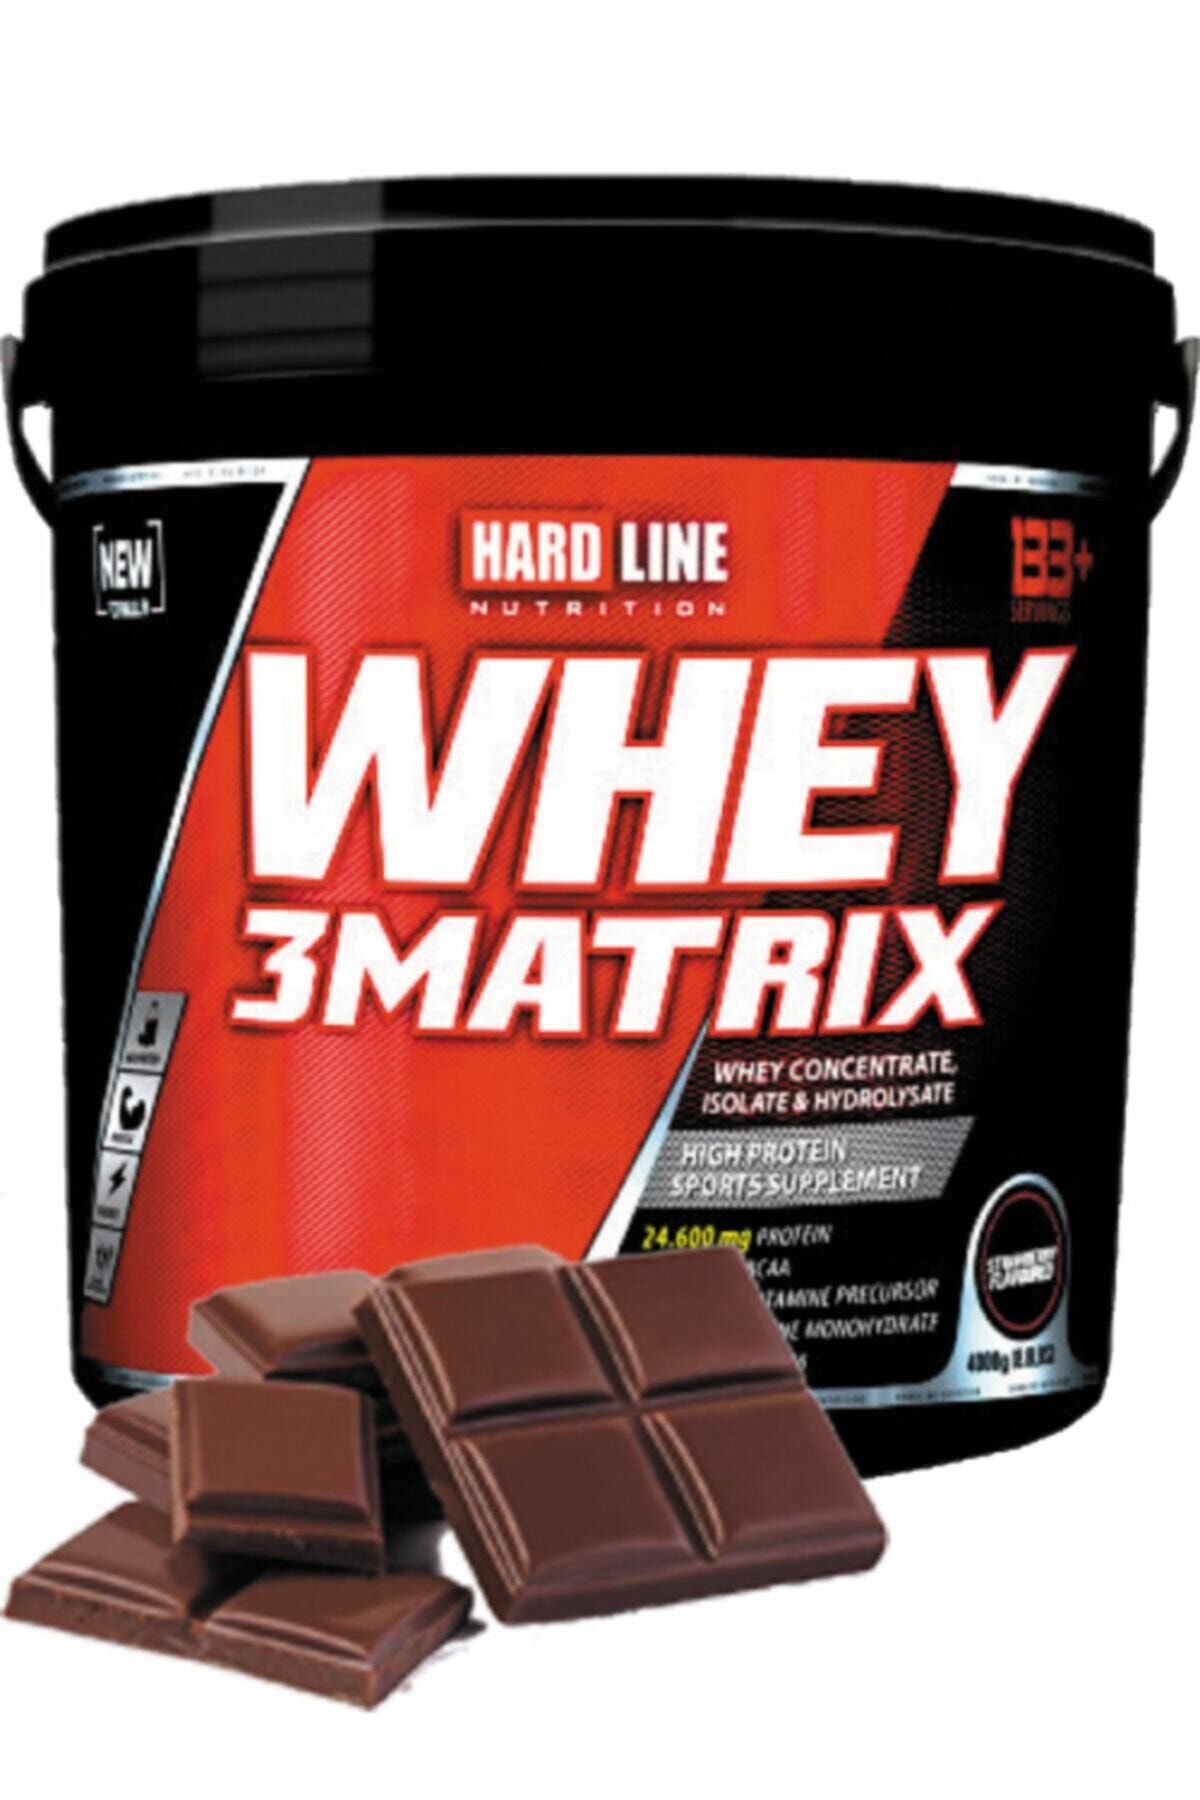 Hardline Whey 3matrix Çikolatalı Protein Tozu 4000 gr